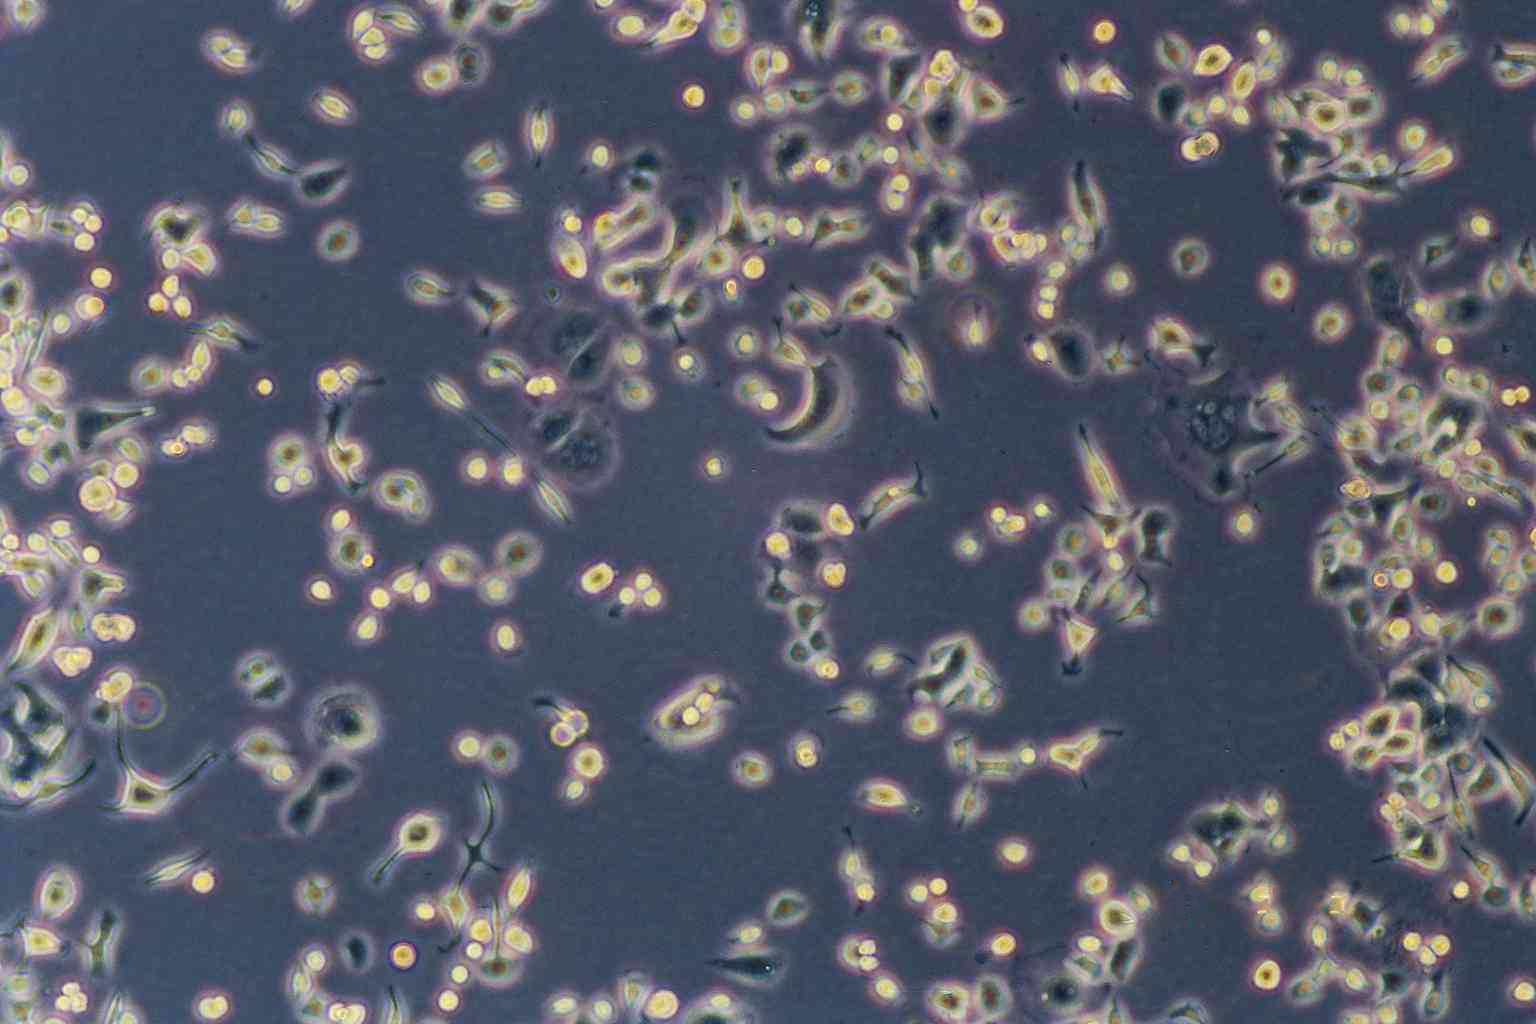 SGC-7901 Cell:人胃癌细胞系,SGC-7901 Cell